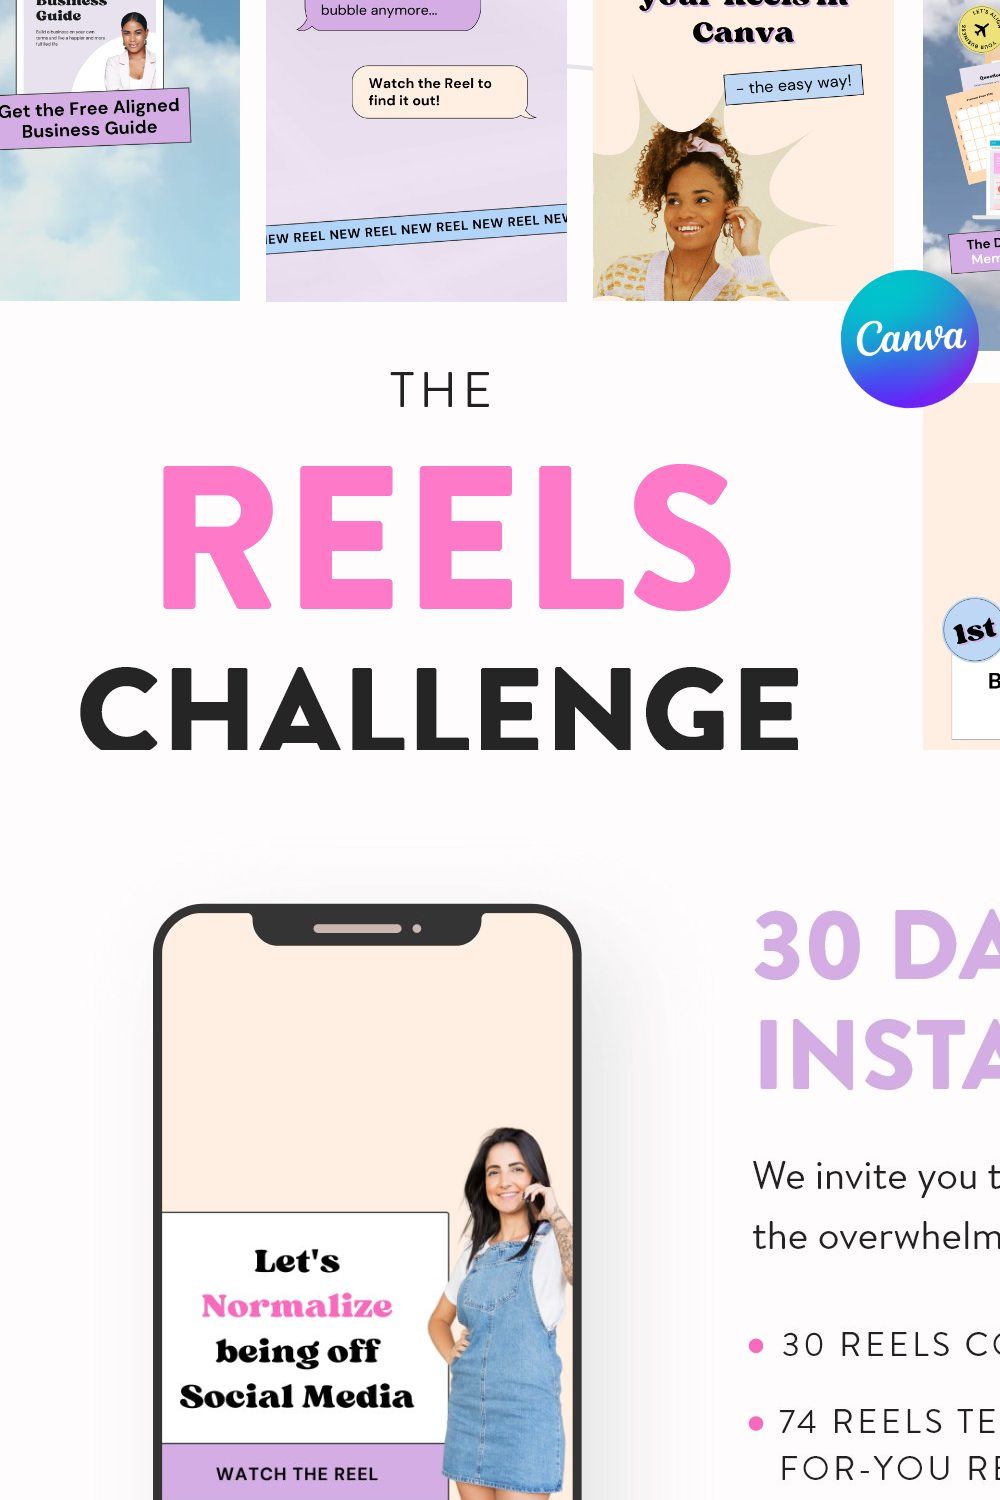 Instagram Reels Challenge Templates pinterest preview image.